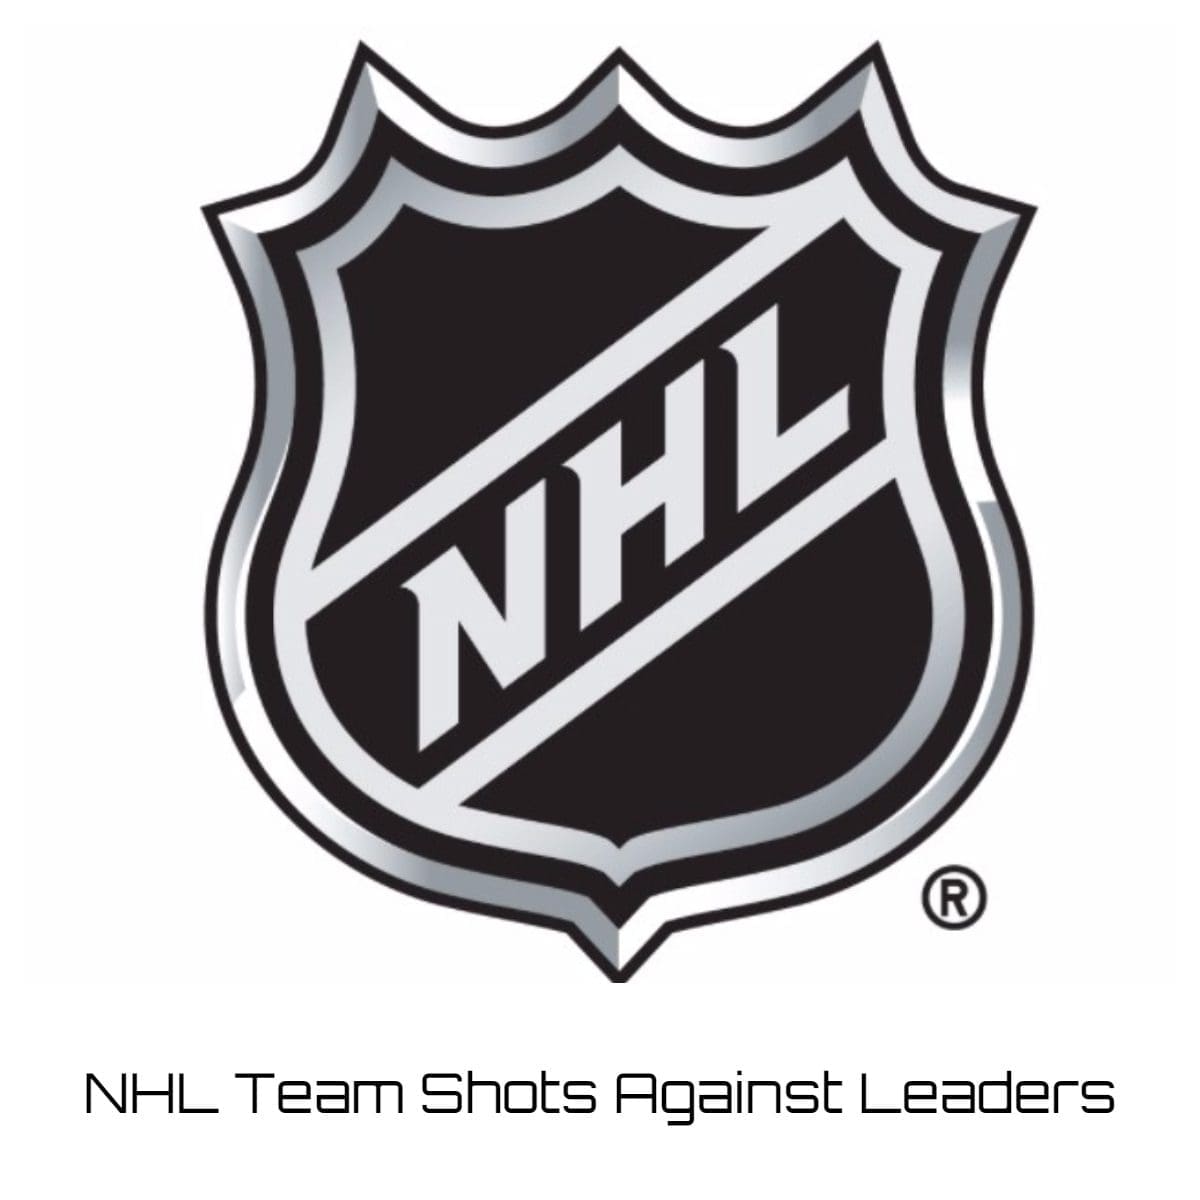 NHL Team Shots Against Leaders 202324? Team Rankings